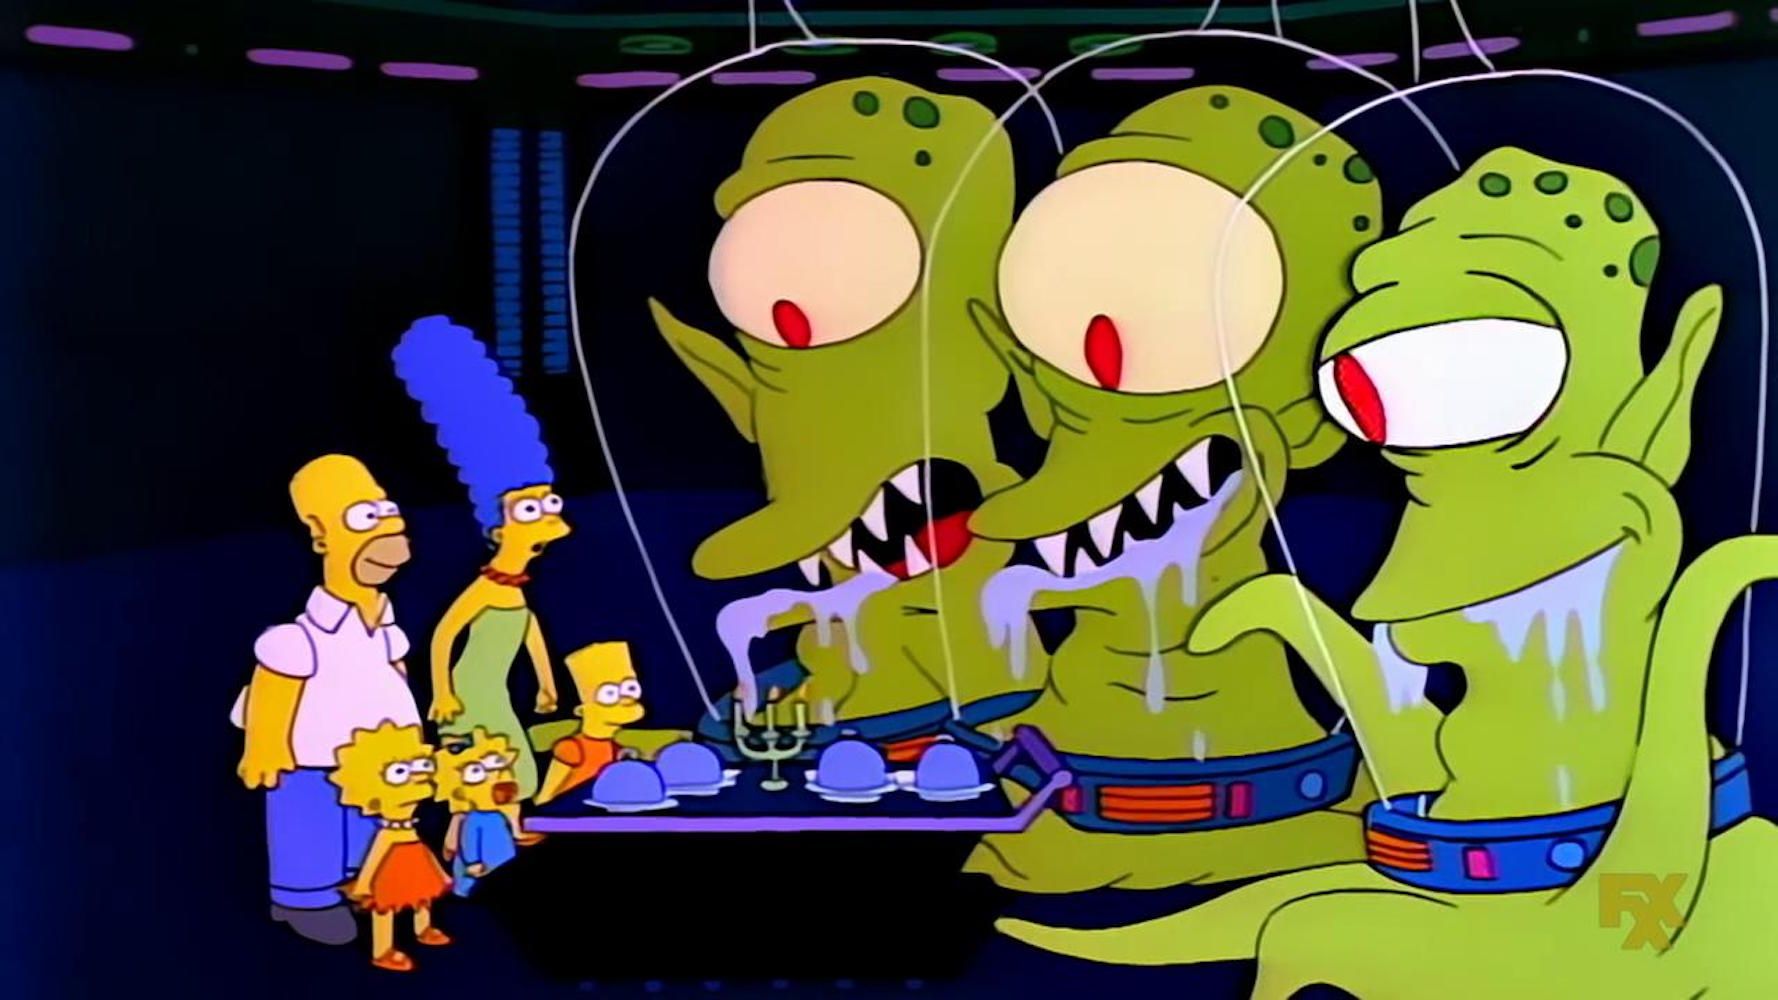 The Simpsons aliens